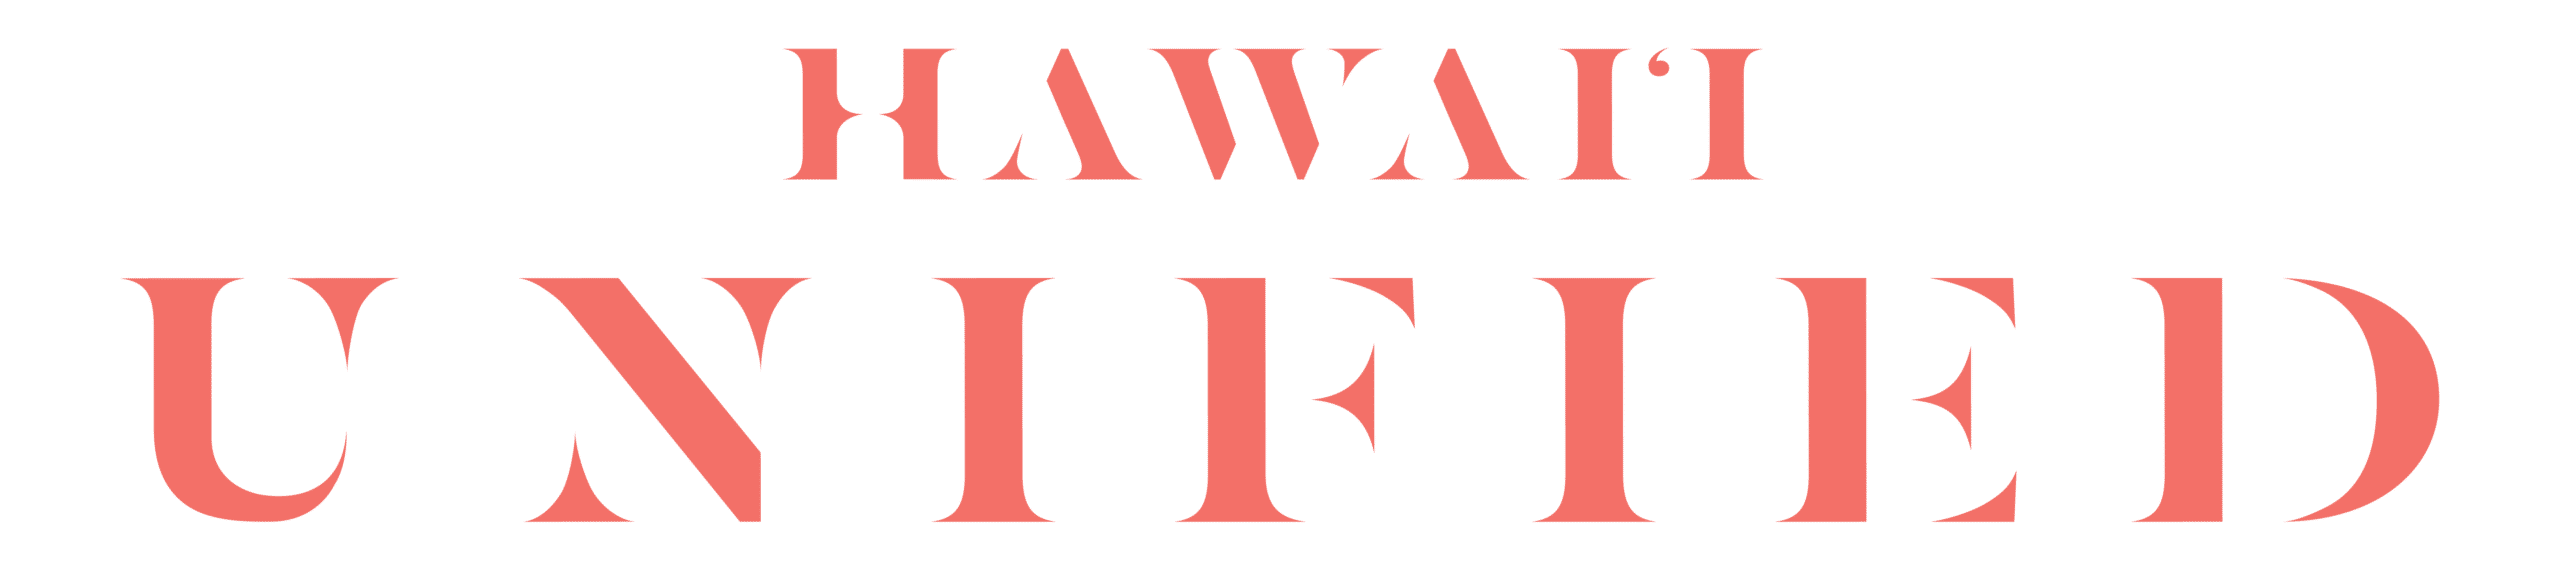 Hawaii Unified Logo